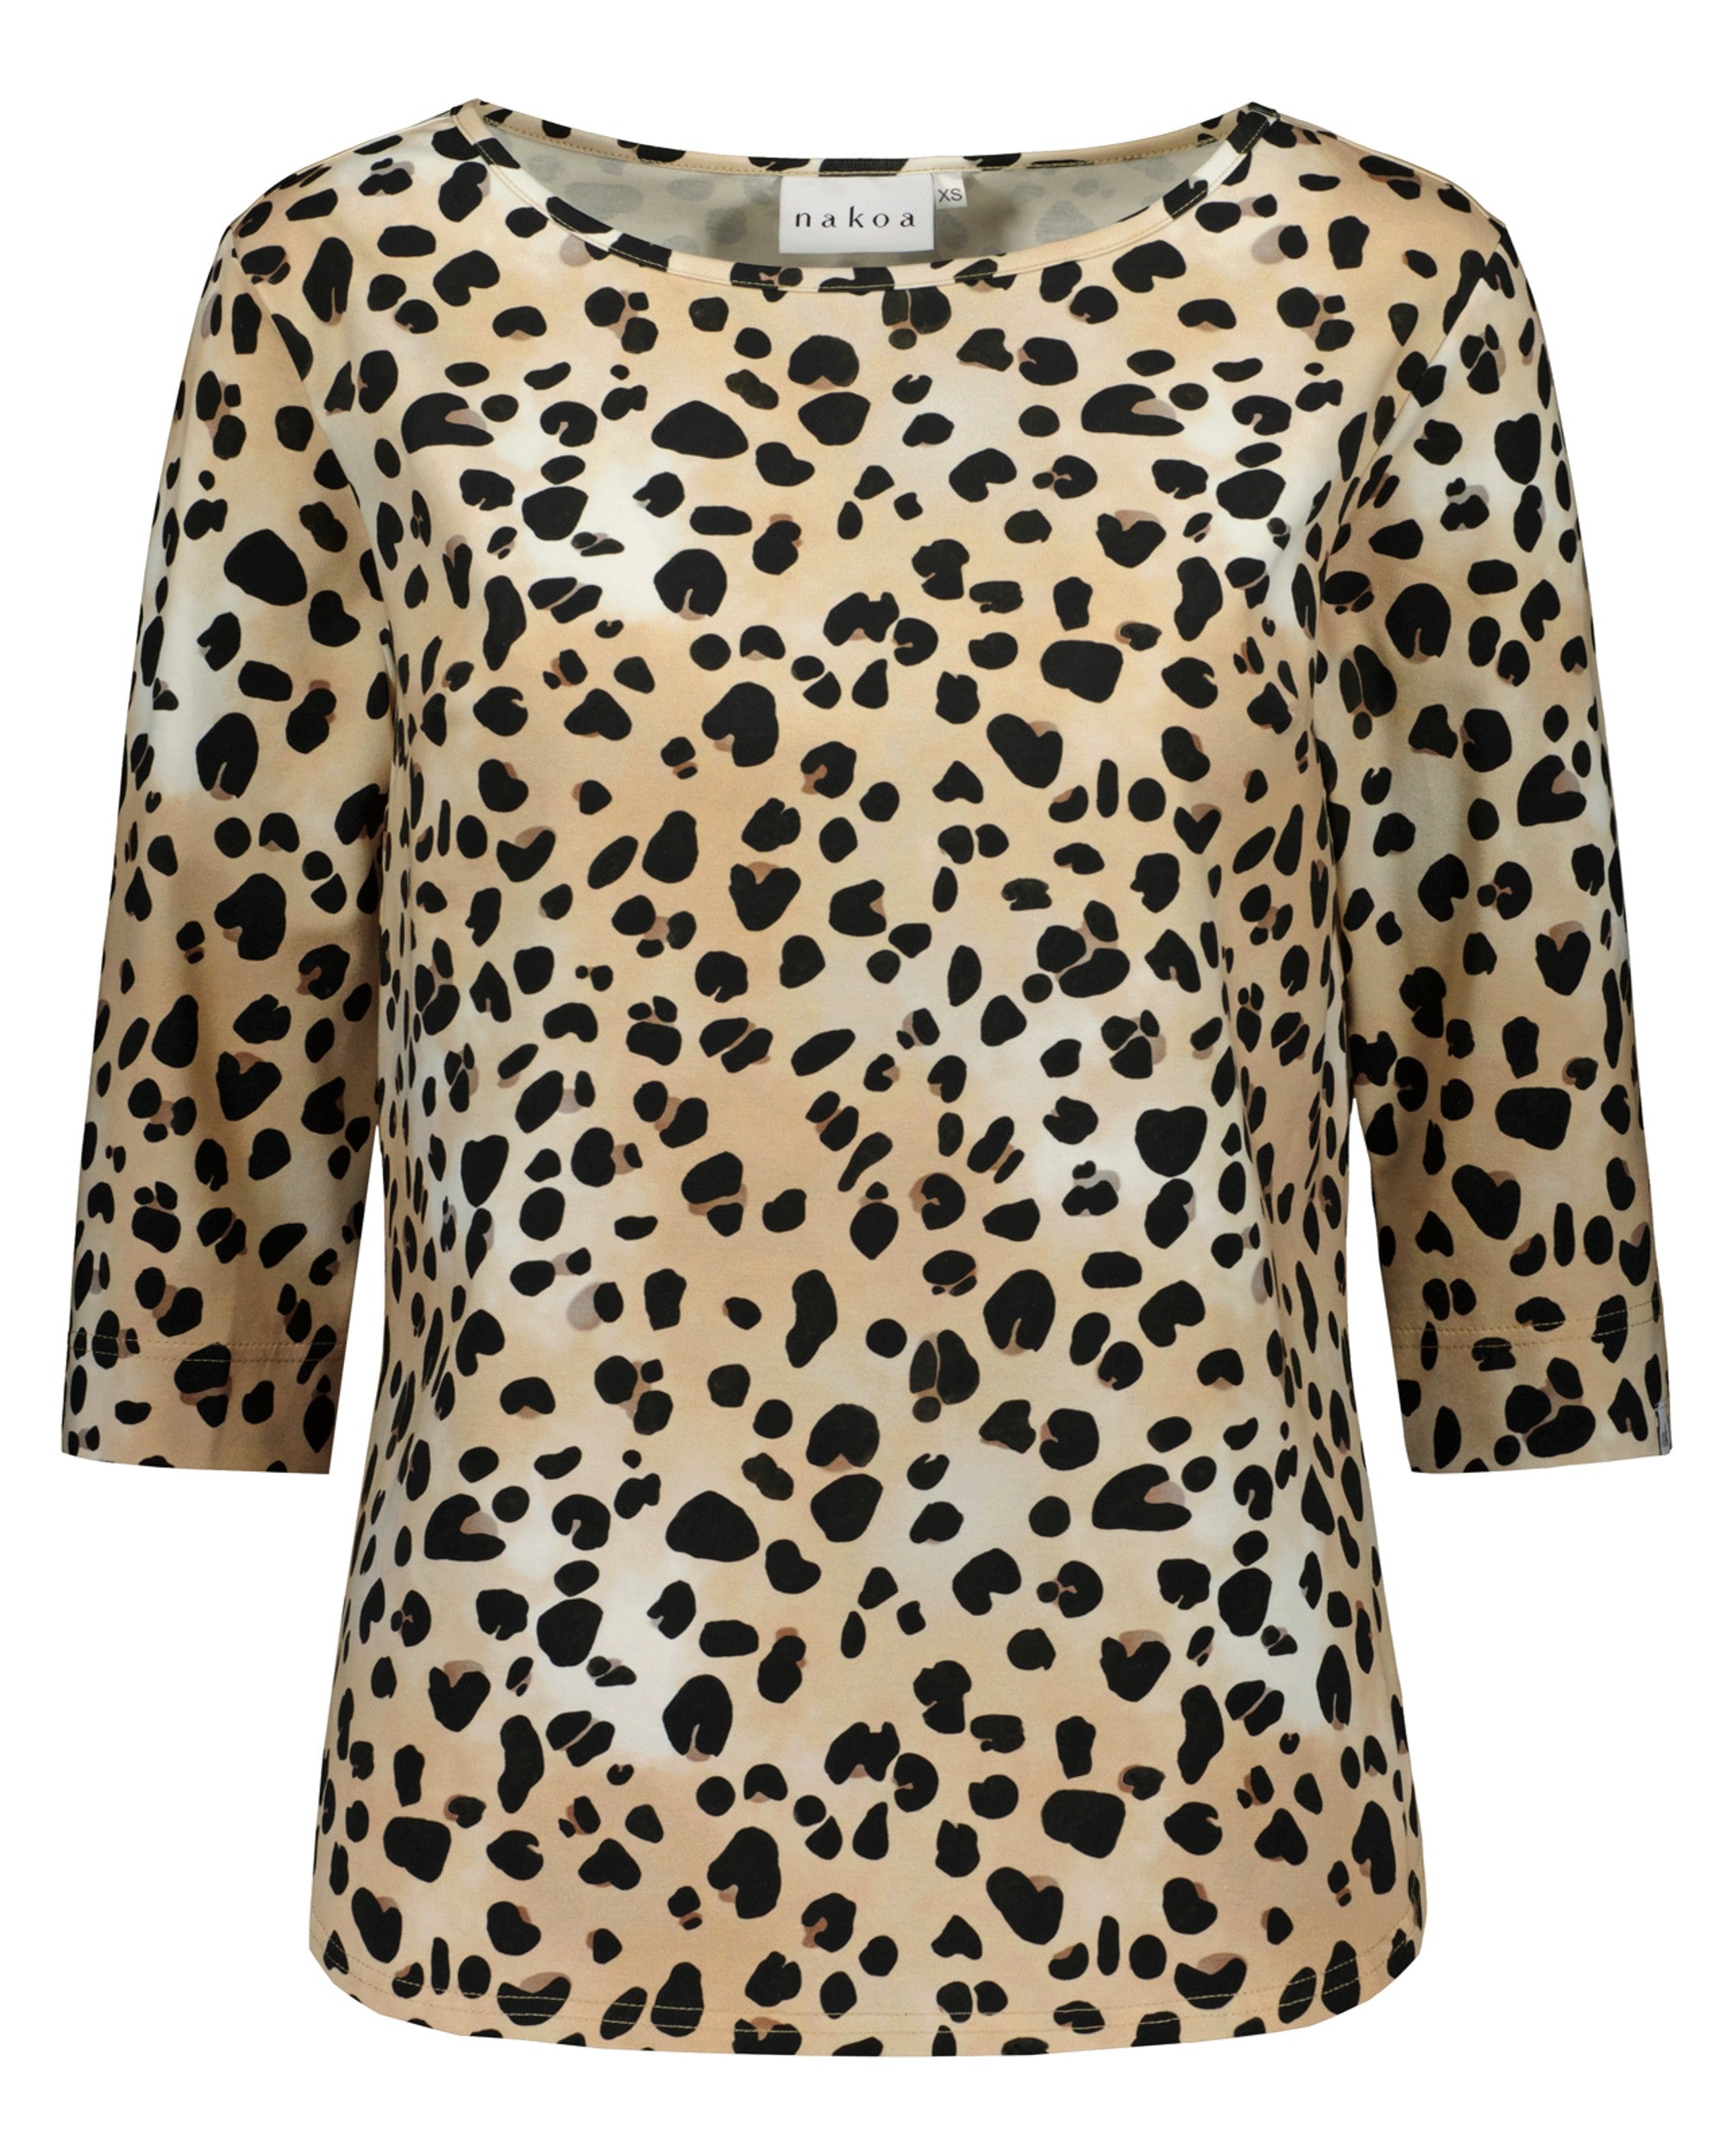 nakoa-classic-blouse-leopard.jpg